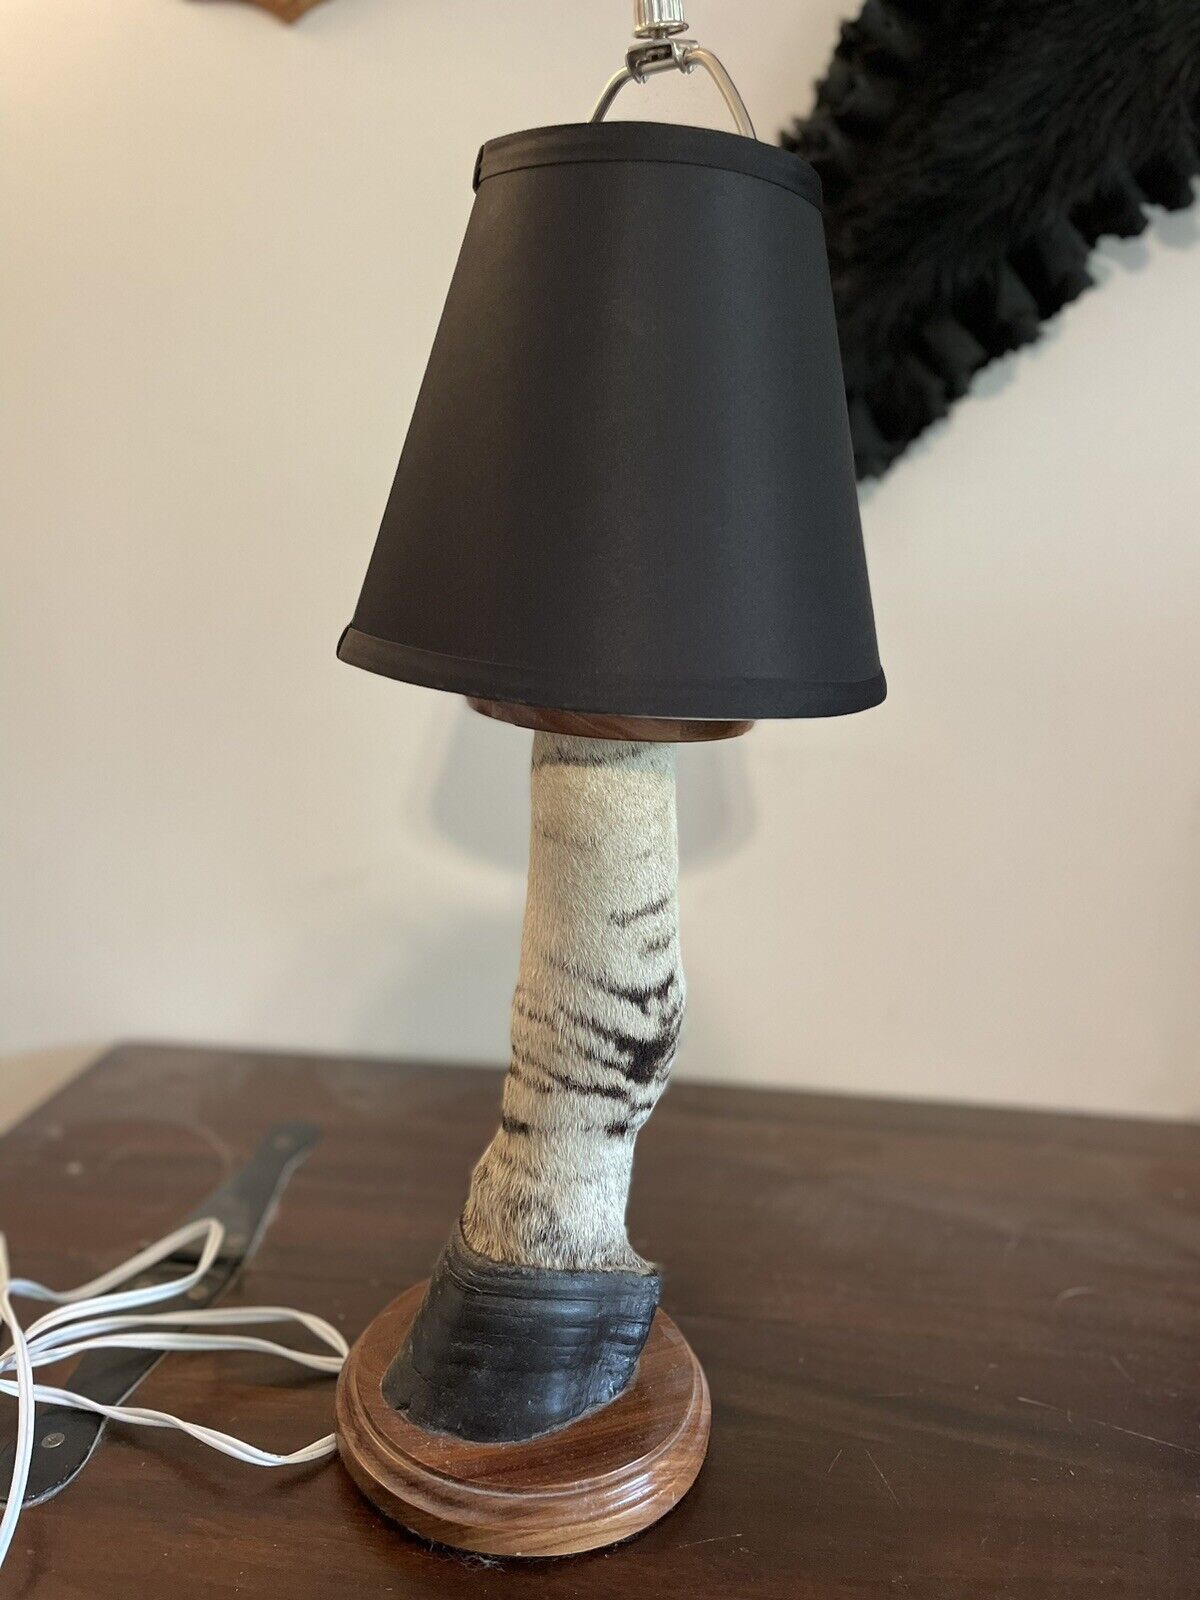 Zebra Hoof Lamp With Wood Base And Black Shade